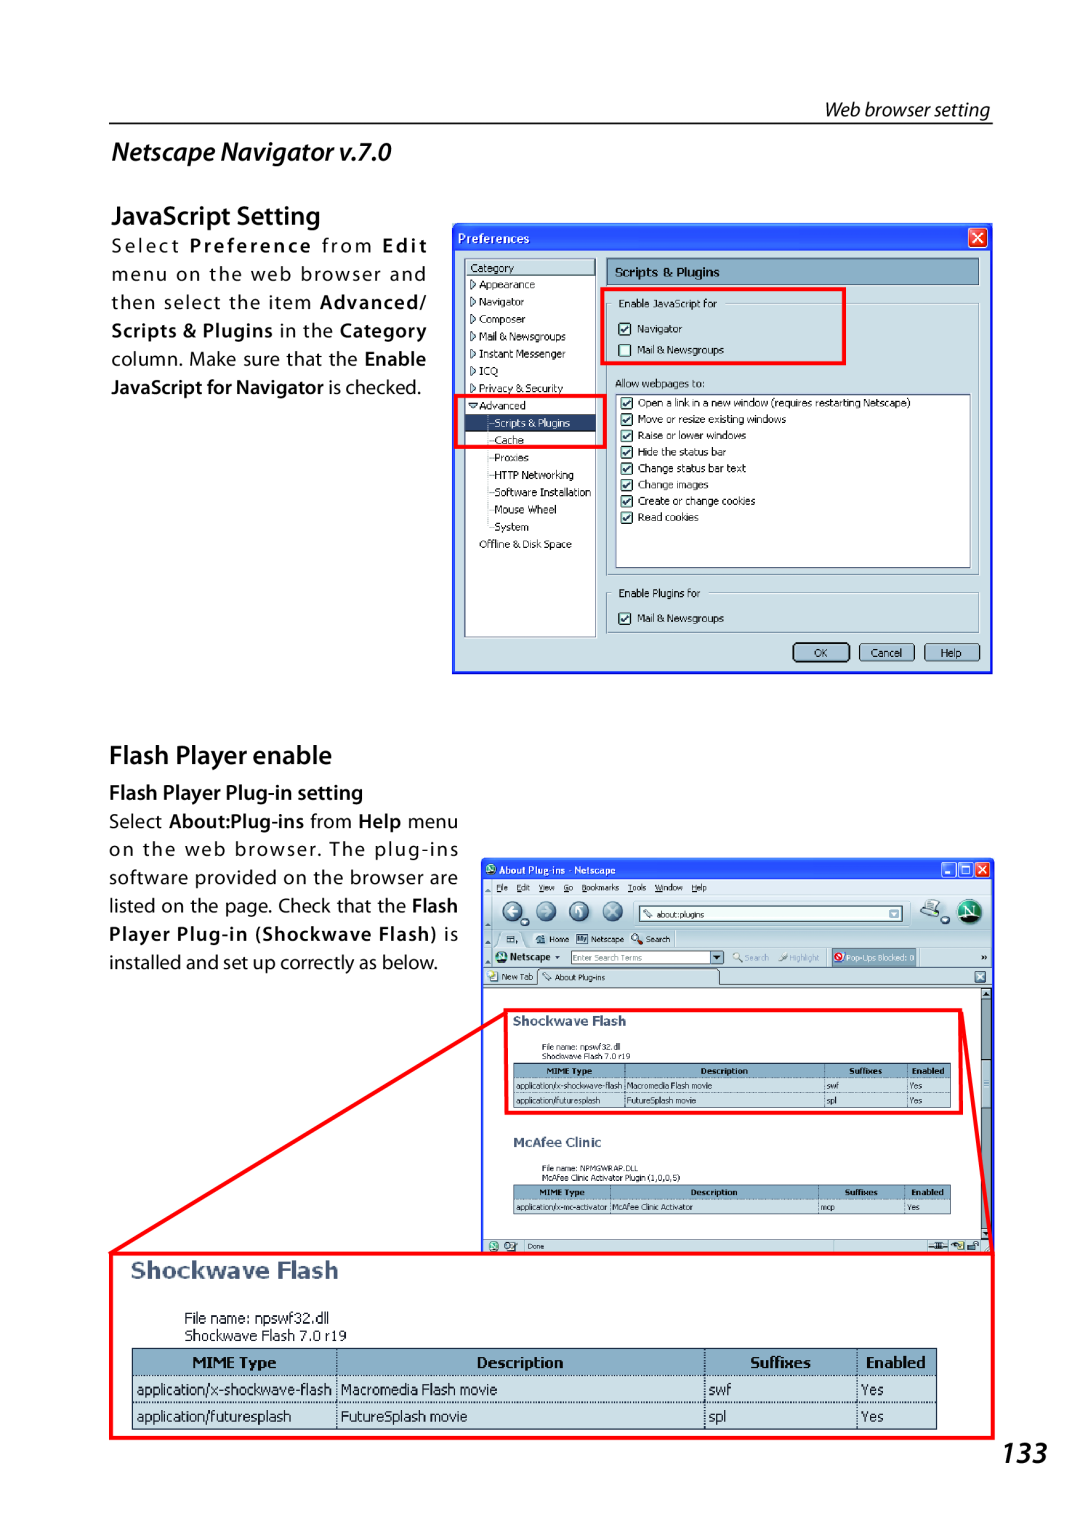 Sanyo PLCXL51 owner manual Netscape Navigator, JavaScript Setting, Flash Player Plug-insetting, Flash Player enable 